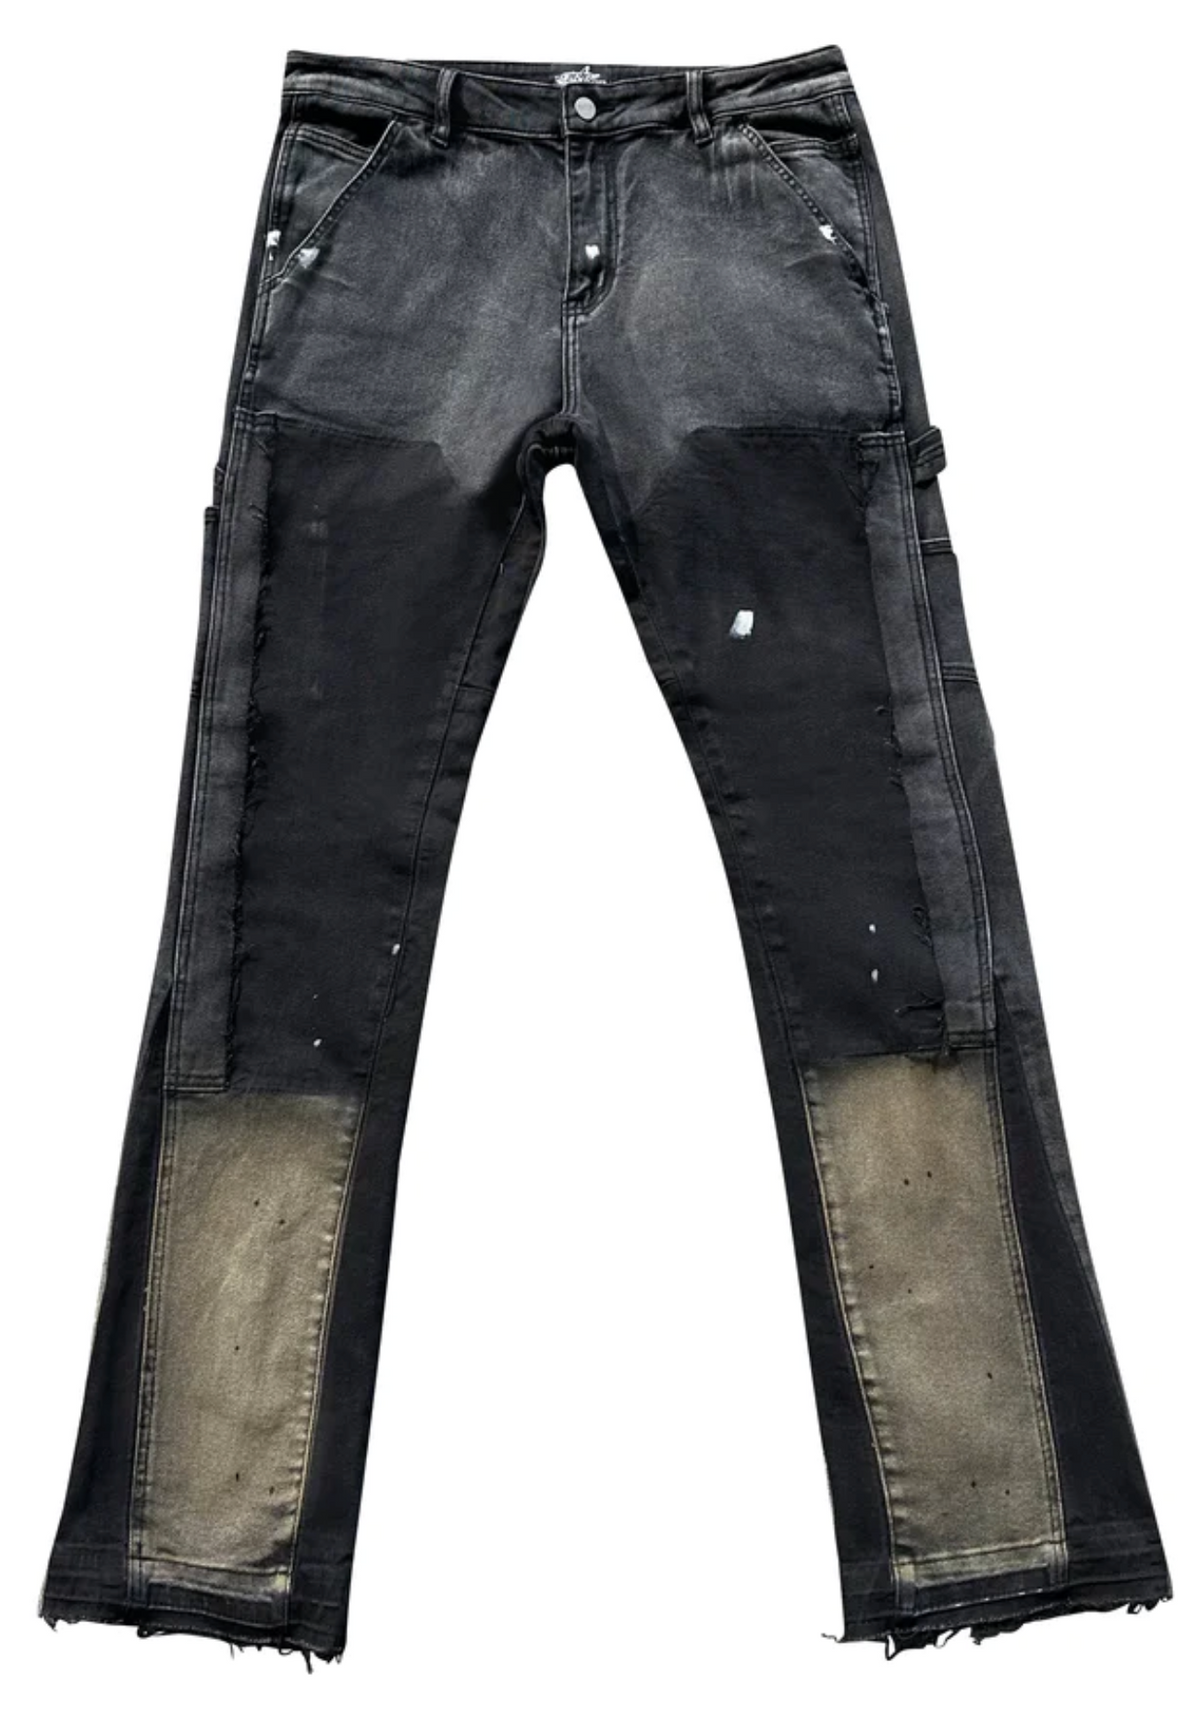 Black denim jeans 777